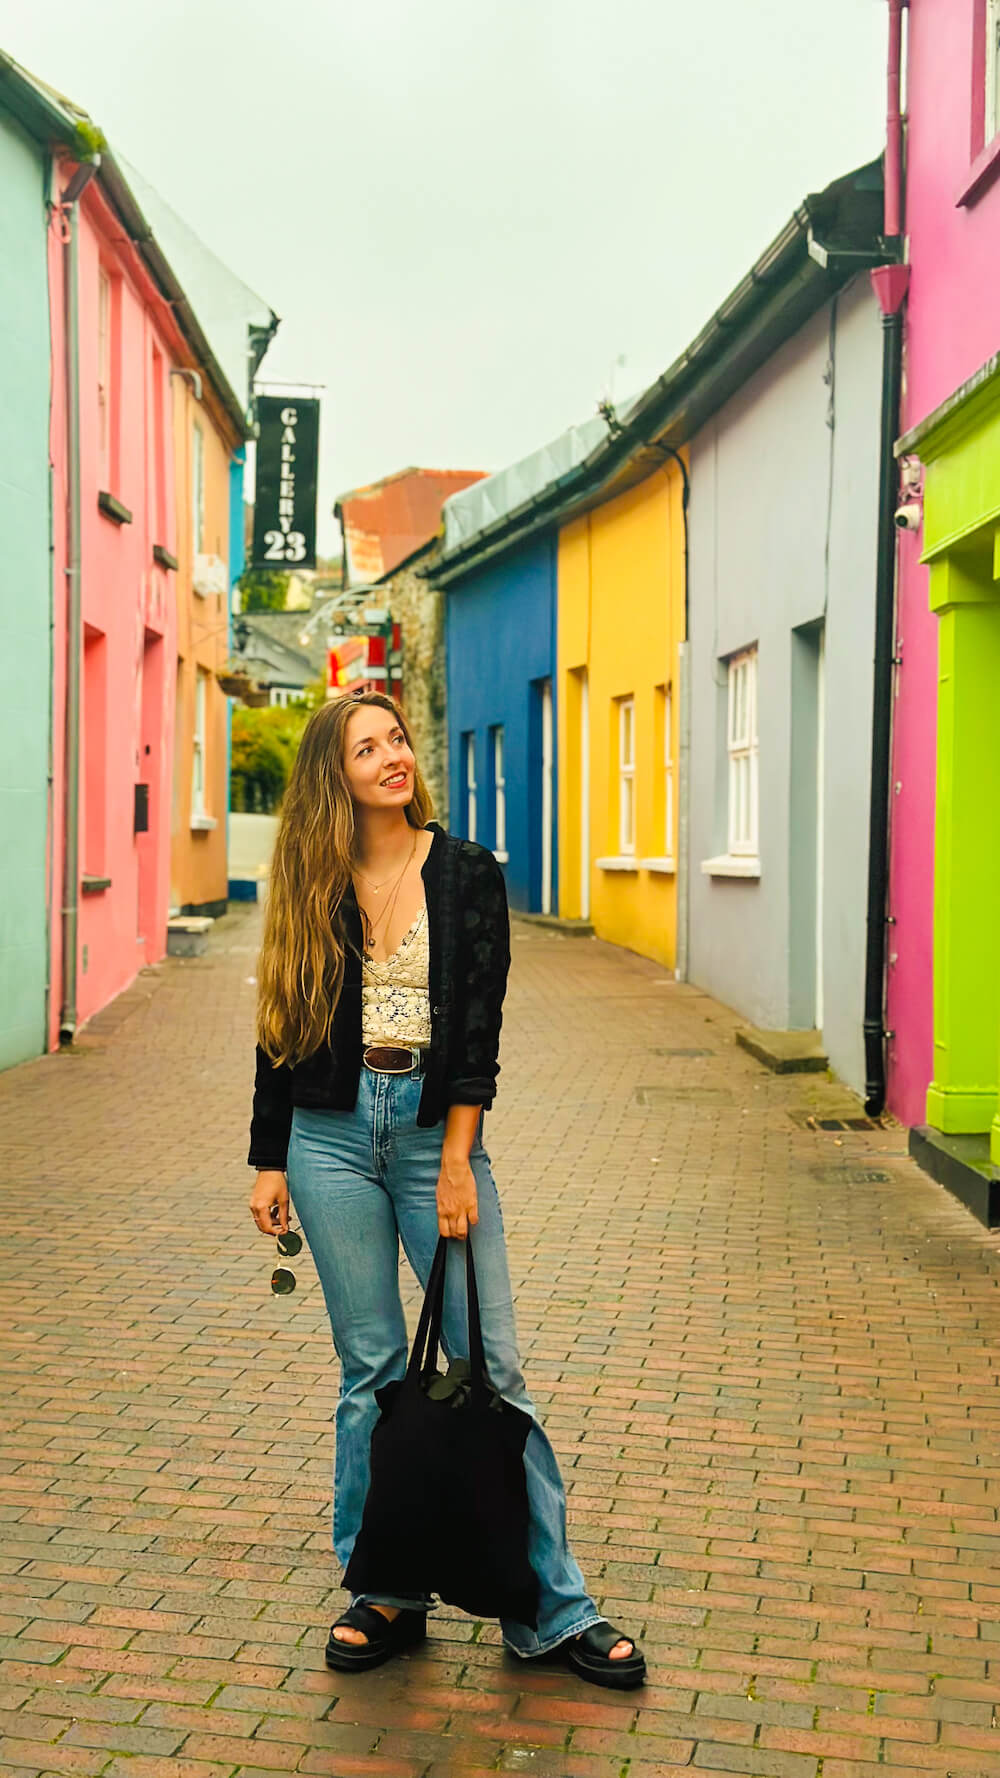 Gekleurde huizen Kinsale ireland